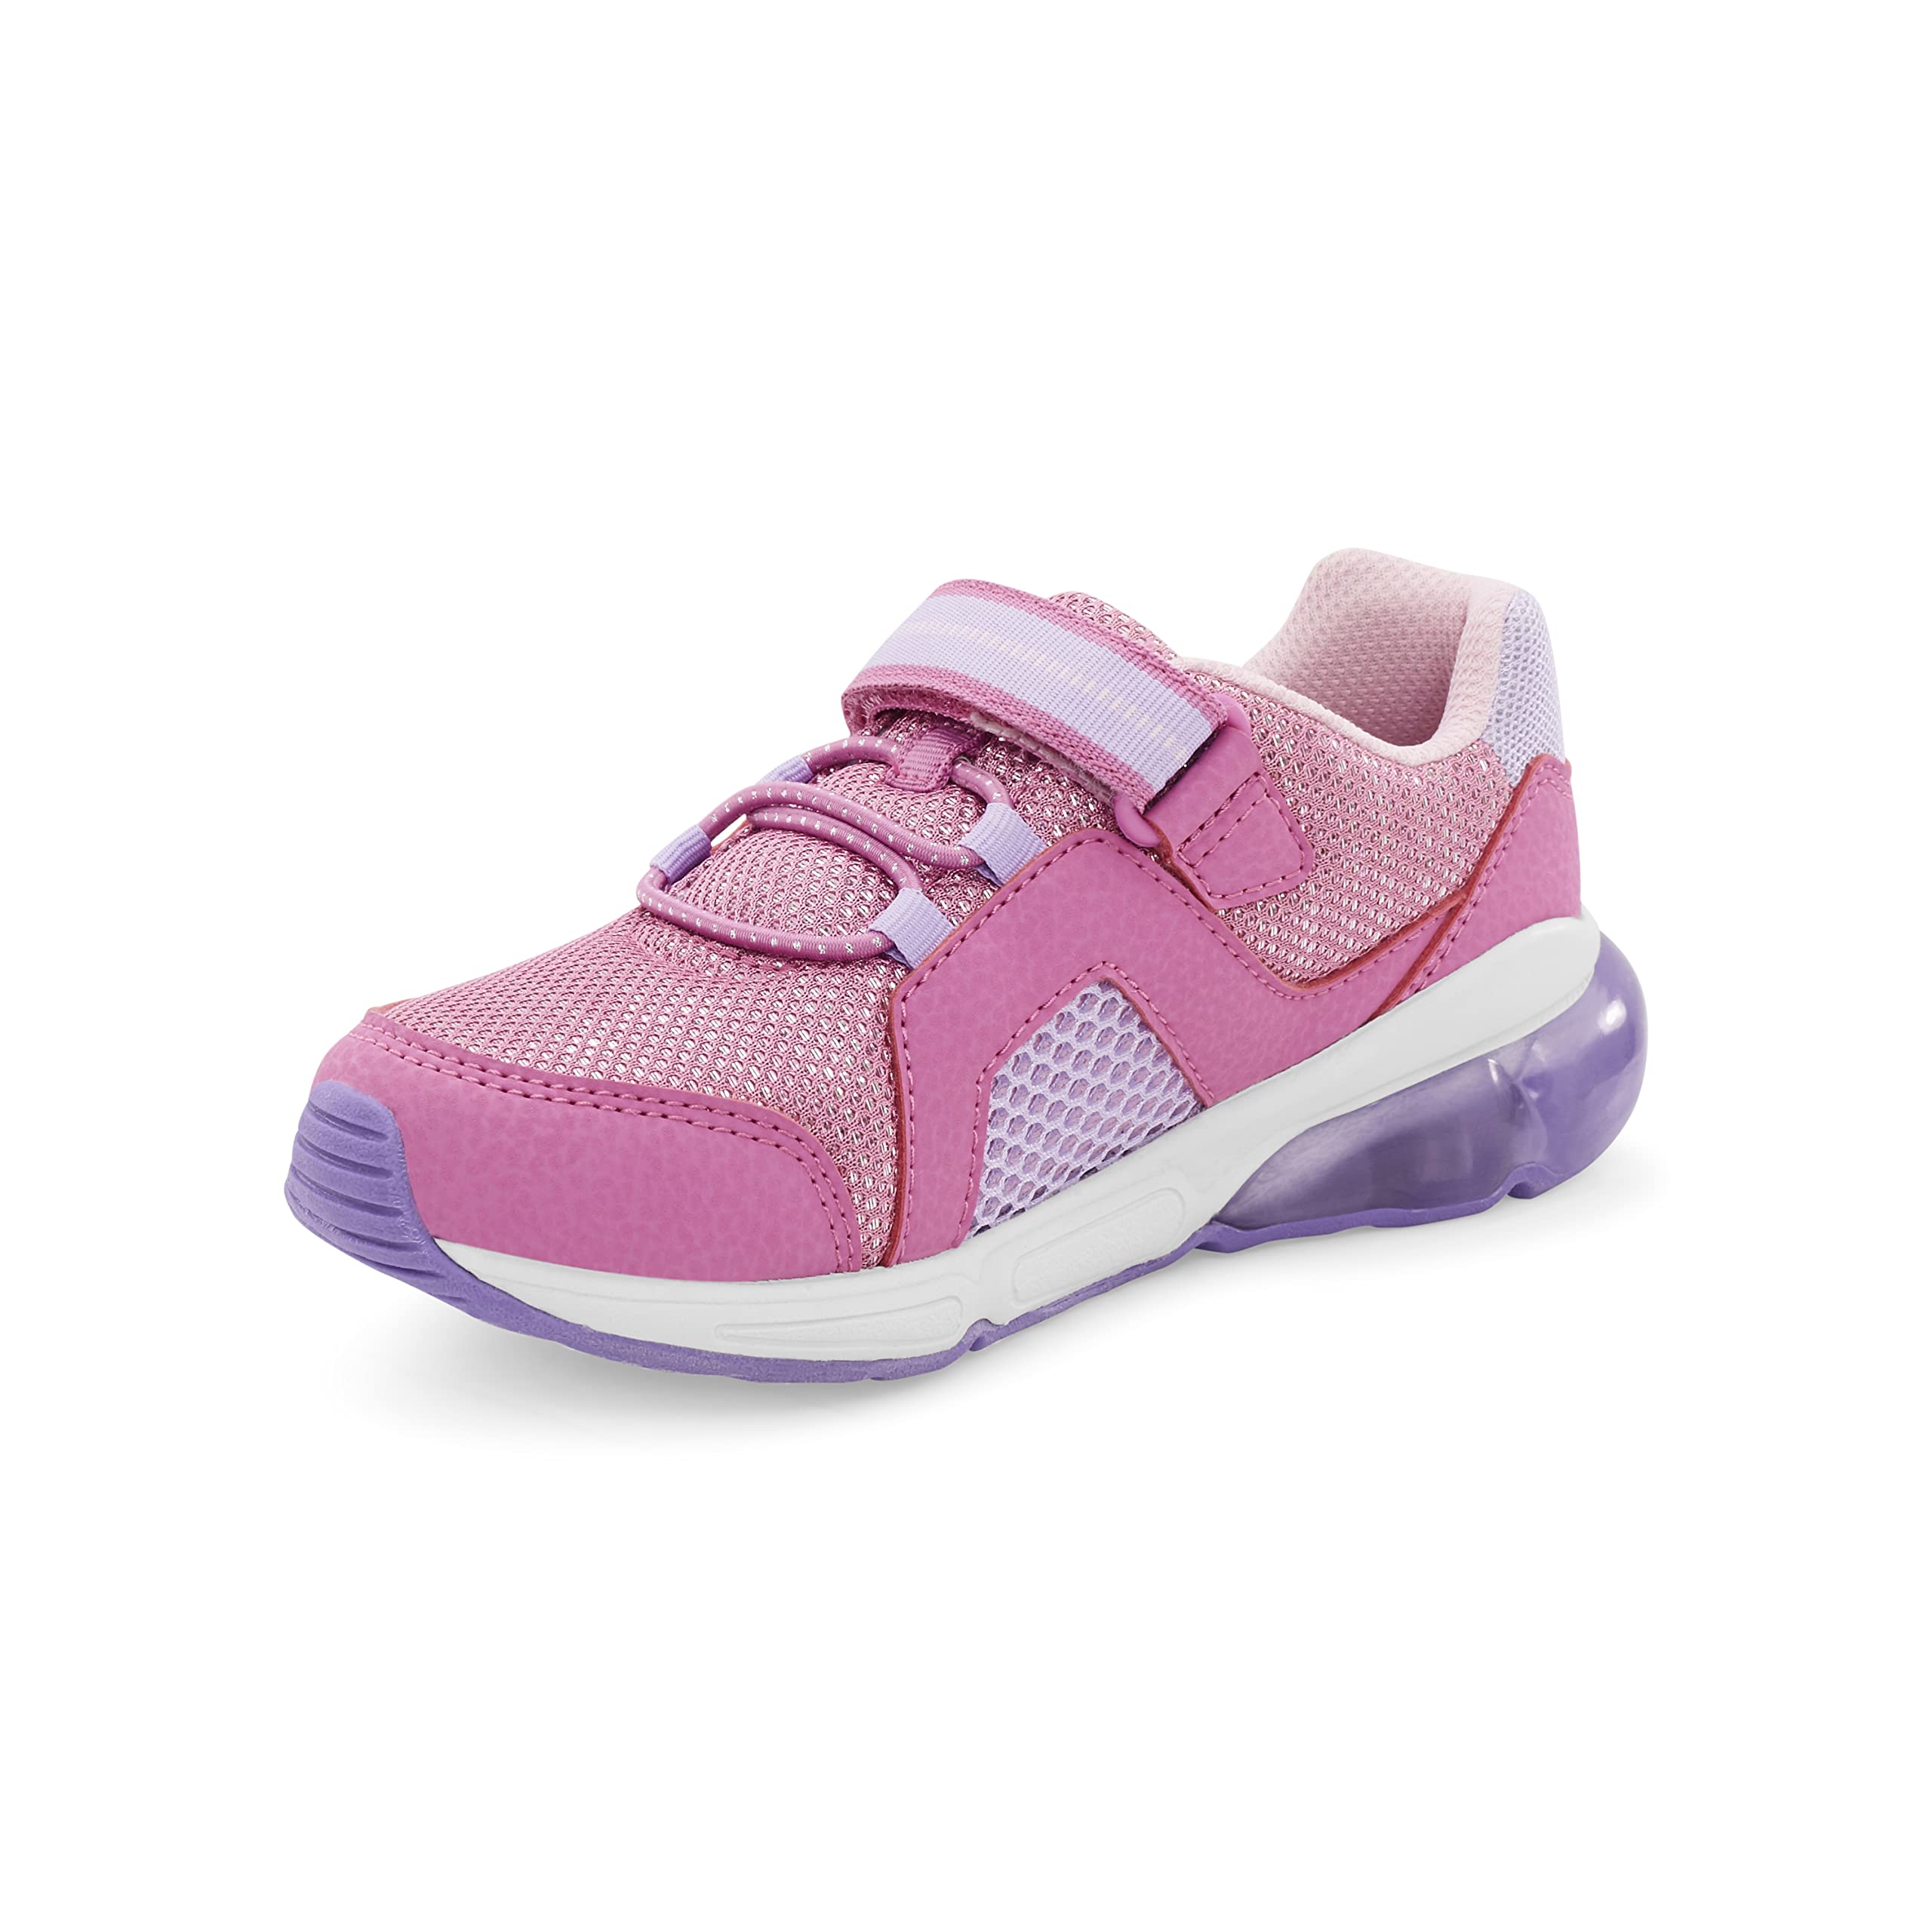 Stride Rite Unisex-Child M2p Lumi Bounce Sneaker